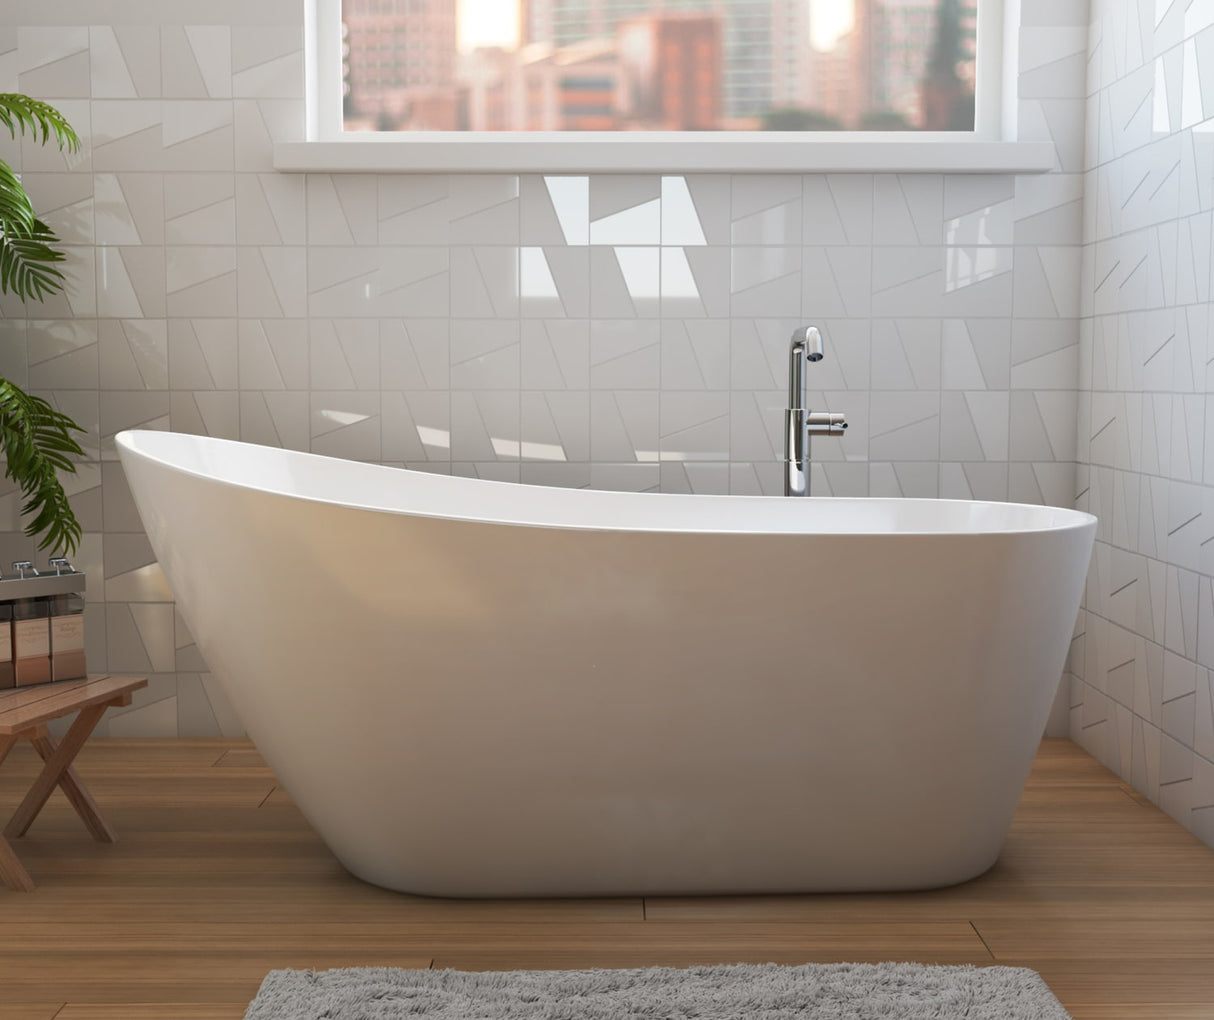 MAAX 107531-000-001-000 Soca 59 x 28 Acrylic Freestanding Slipper End Drain Bathtub in White